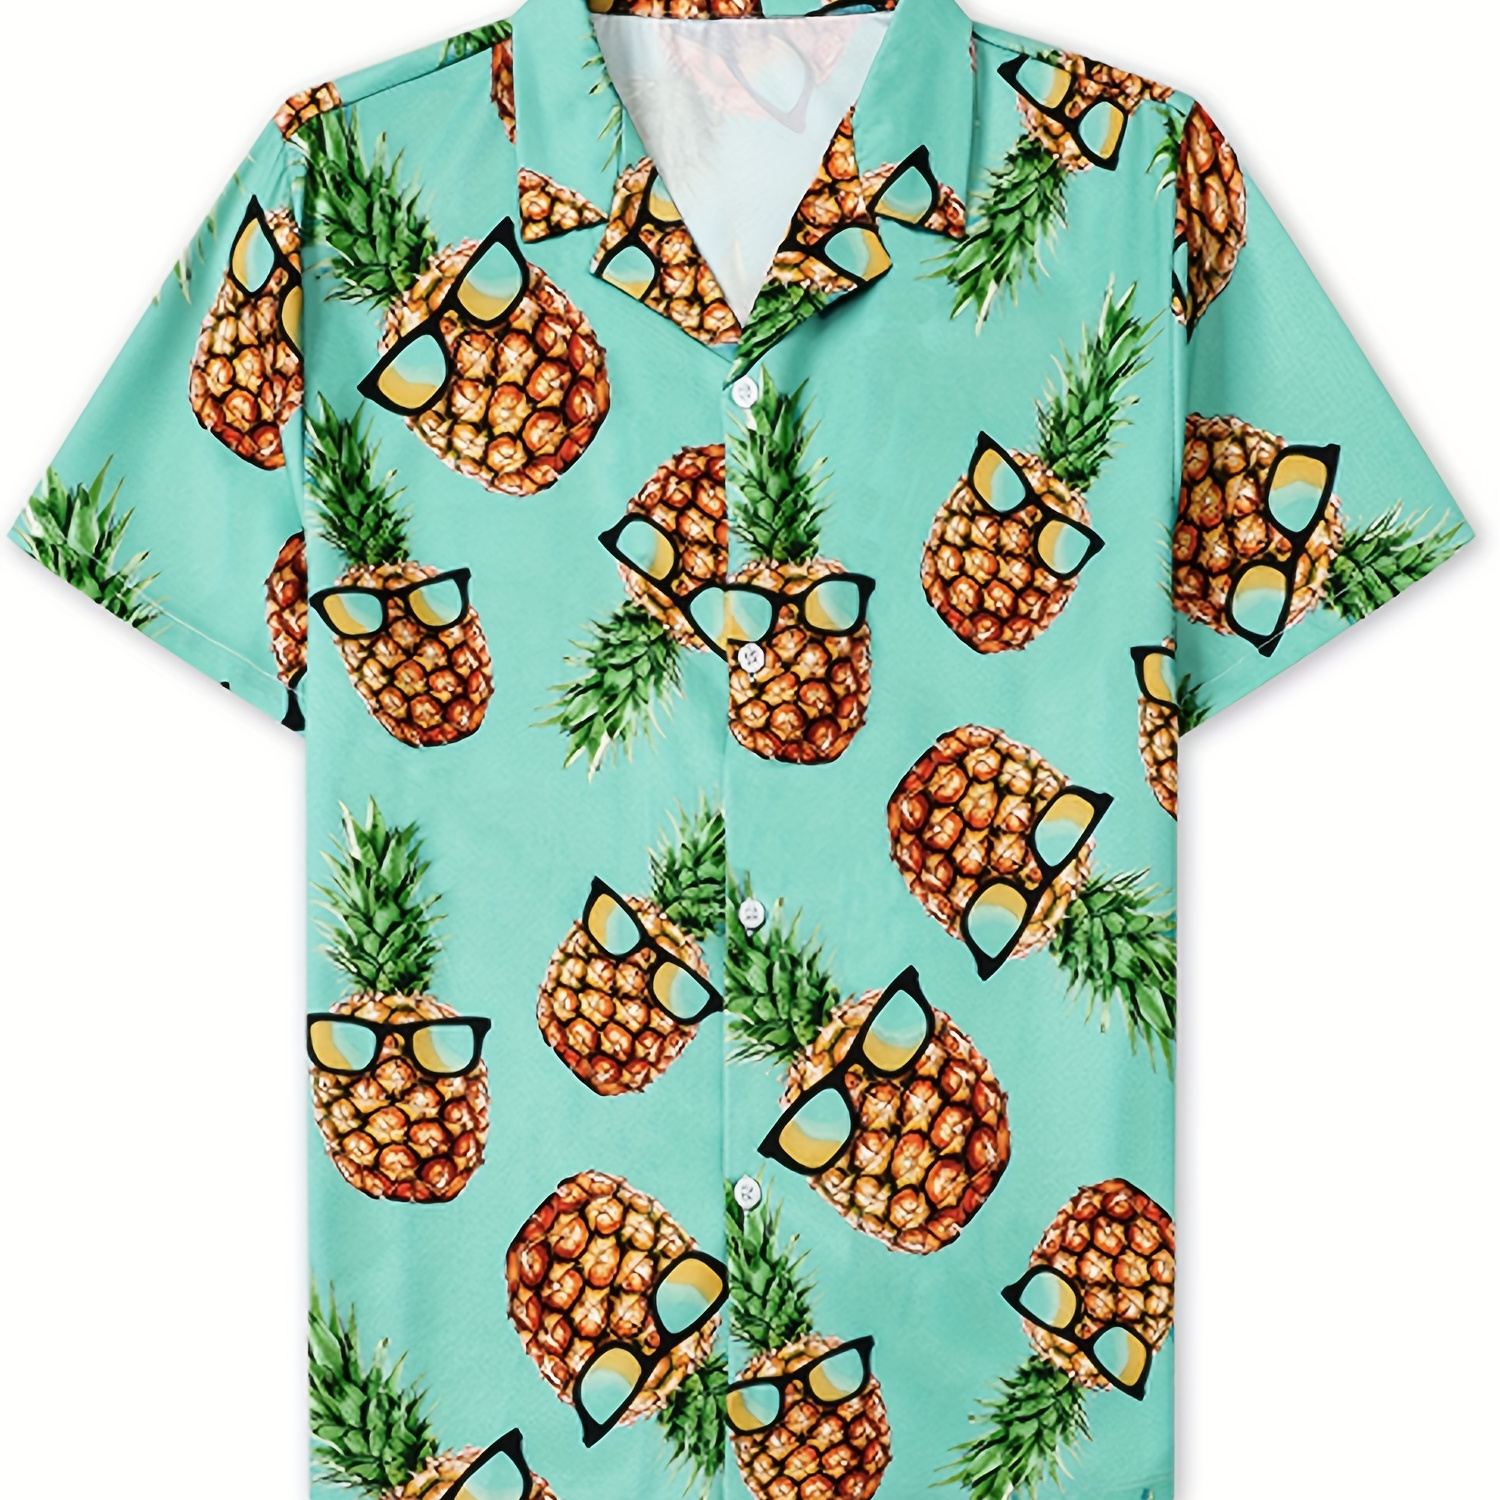 

Boy's Trendy Creative Hawaii Shirt, Pineapple With Sunglasses Pattern Short Sleeve Button Up Comfortable Summer Top Shirt